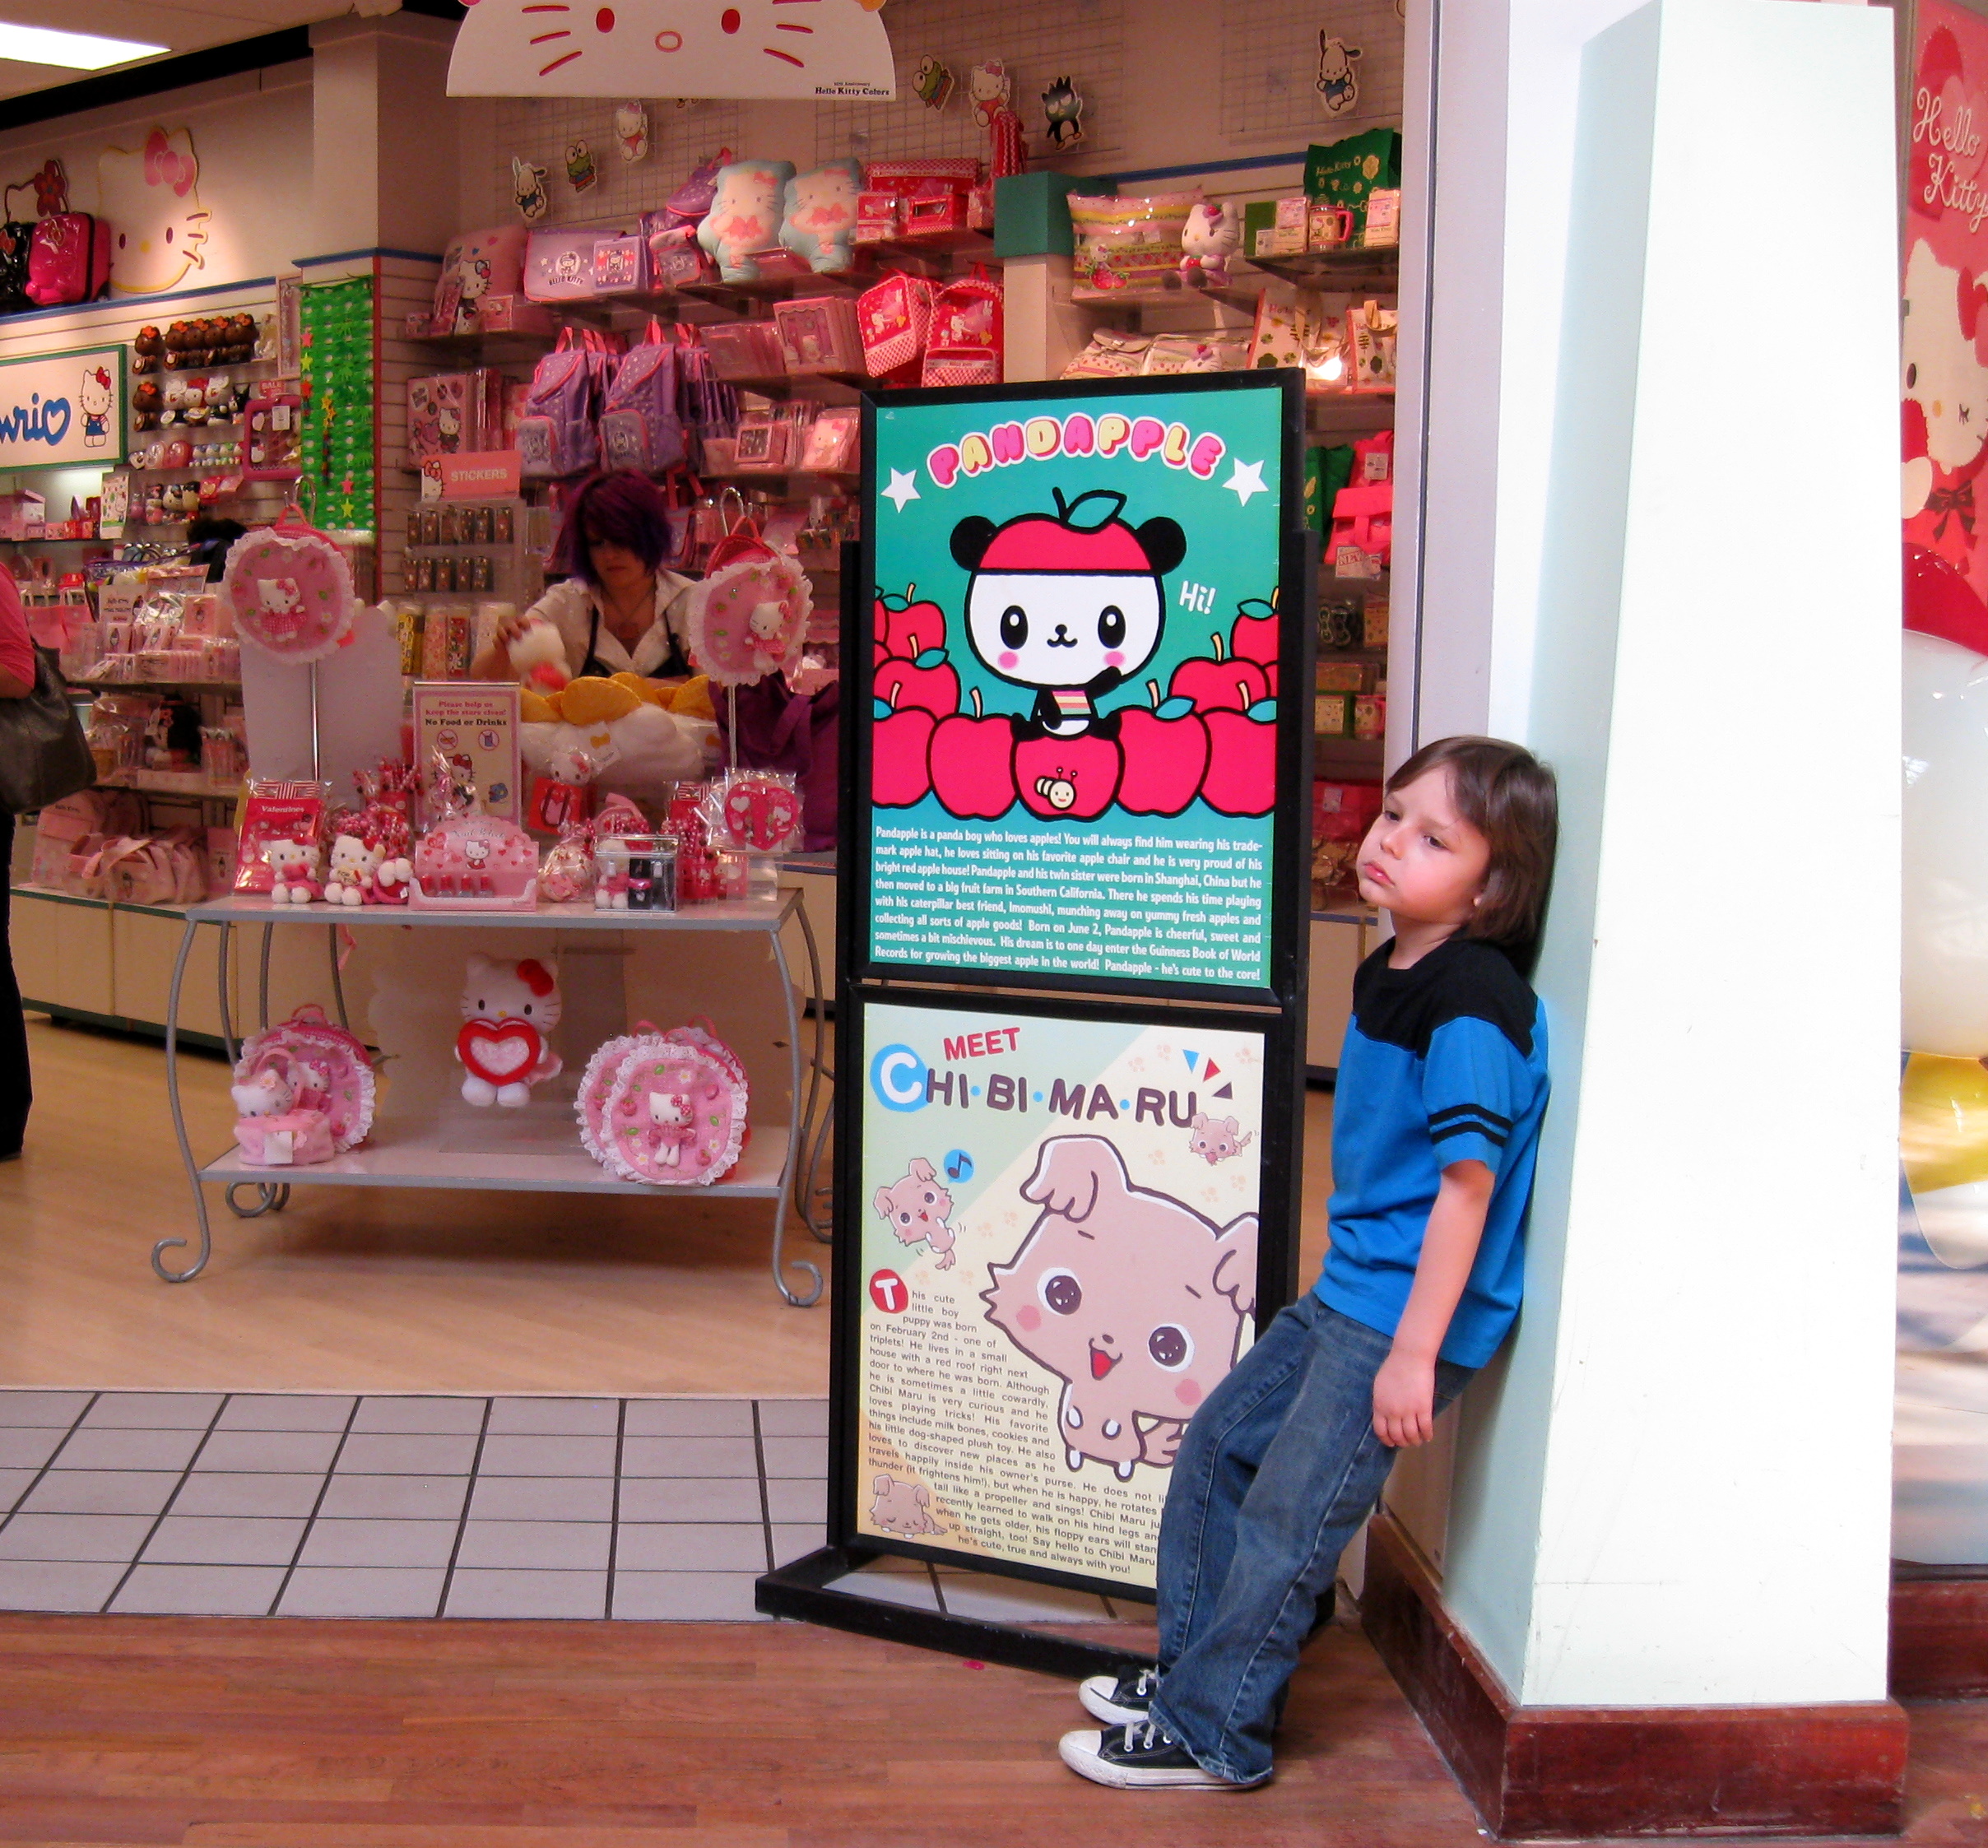 DJ Hello Kitty thrills teenagers in Japan store 